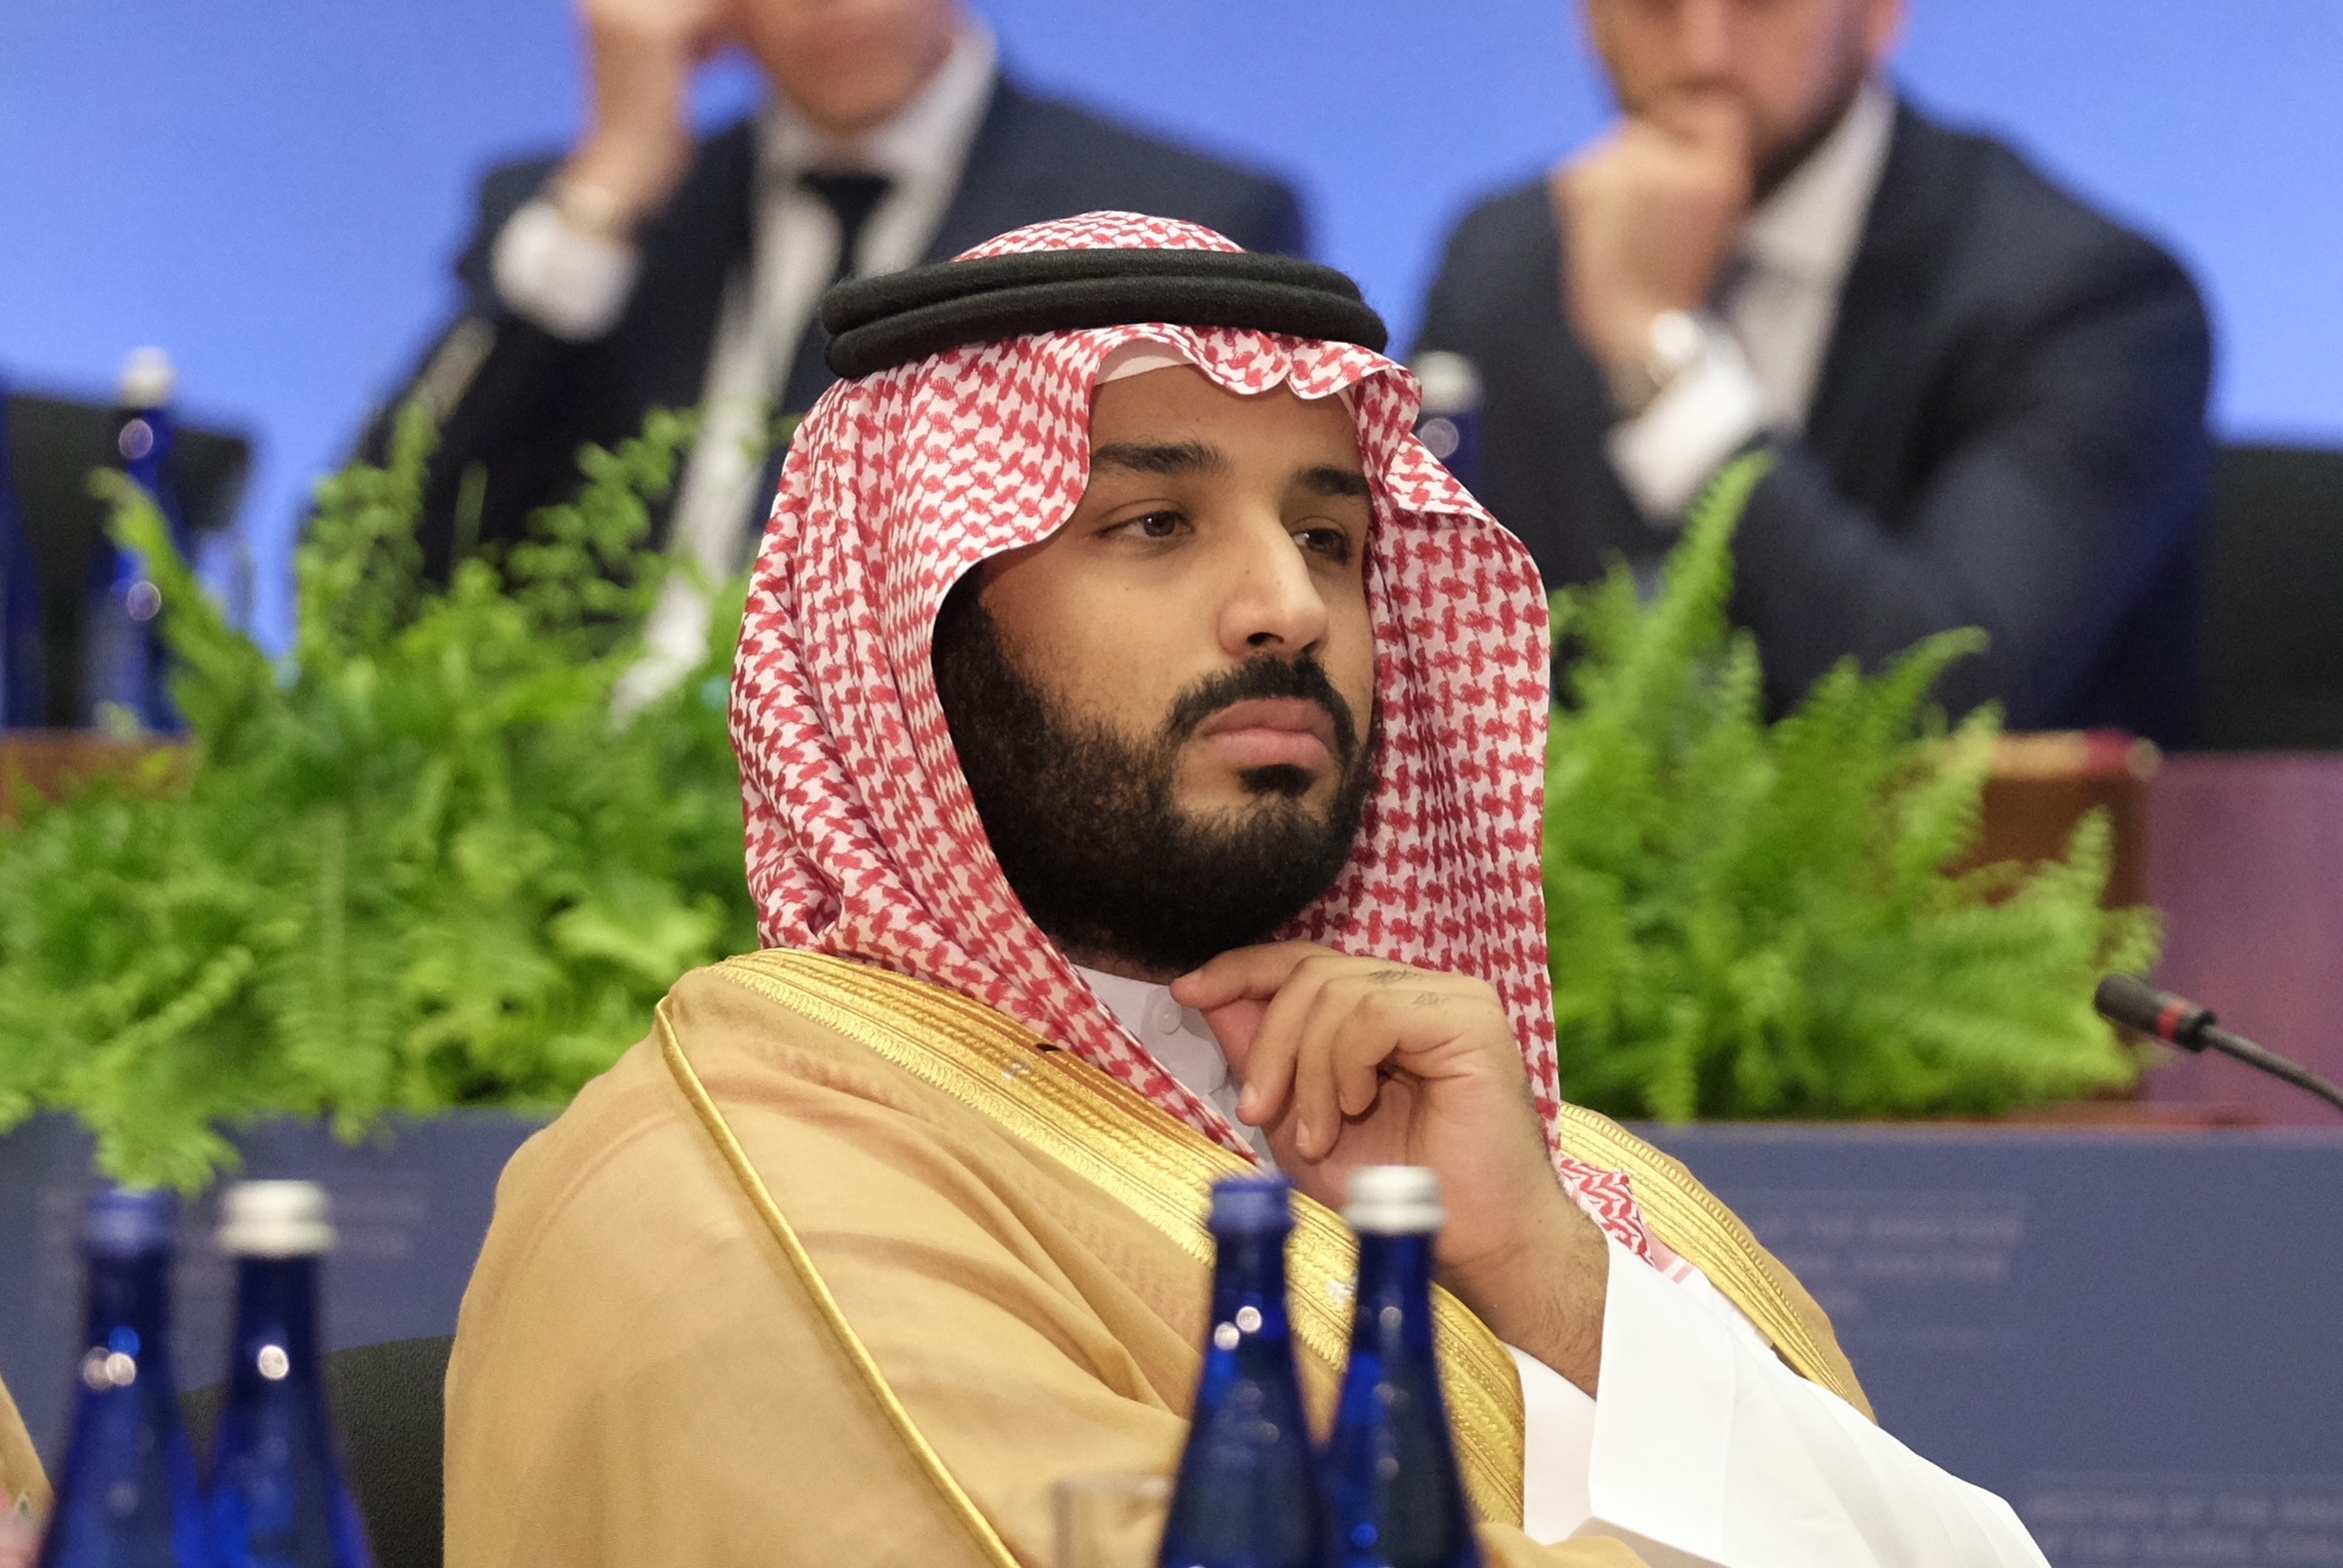 WRAPUP 2-Saudi King Salman assails Iran in United Nations debut